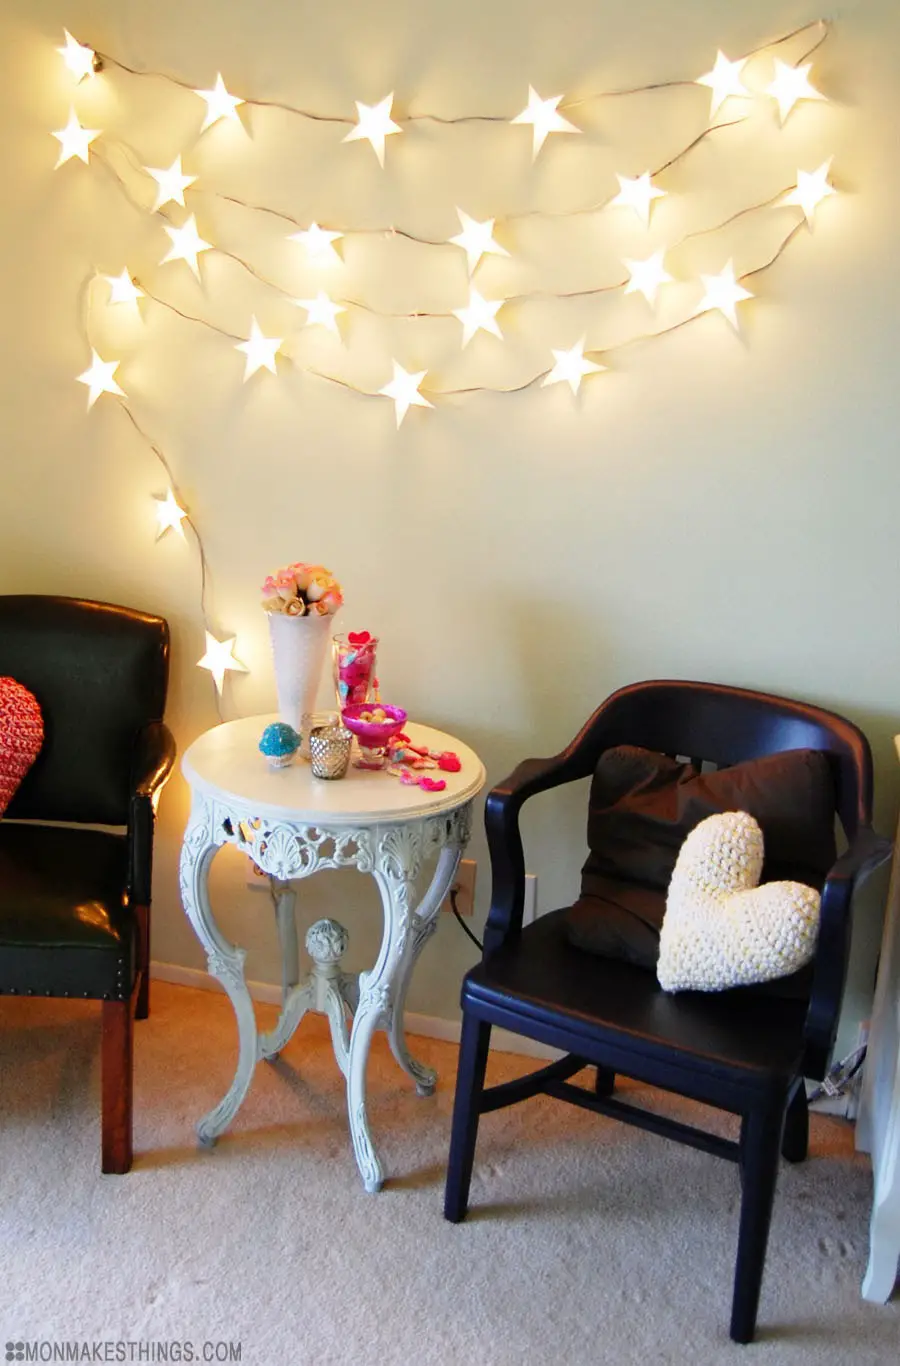 20+ Best DIY String Light Ideas For Your Home Decor, DIY Star Light Star Bright Light Garland